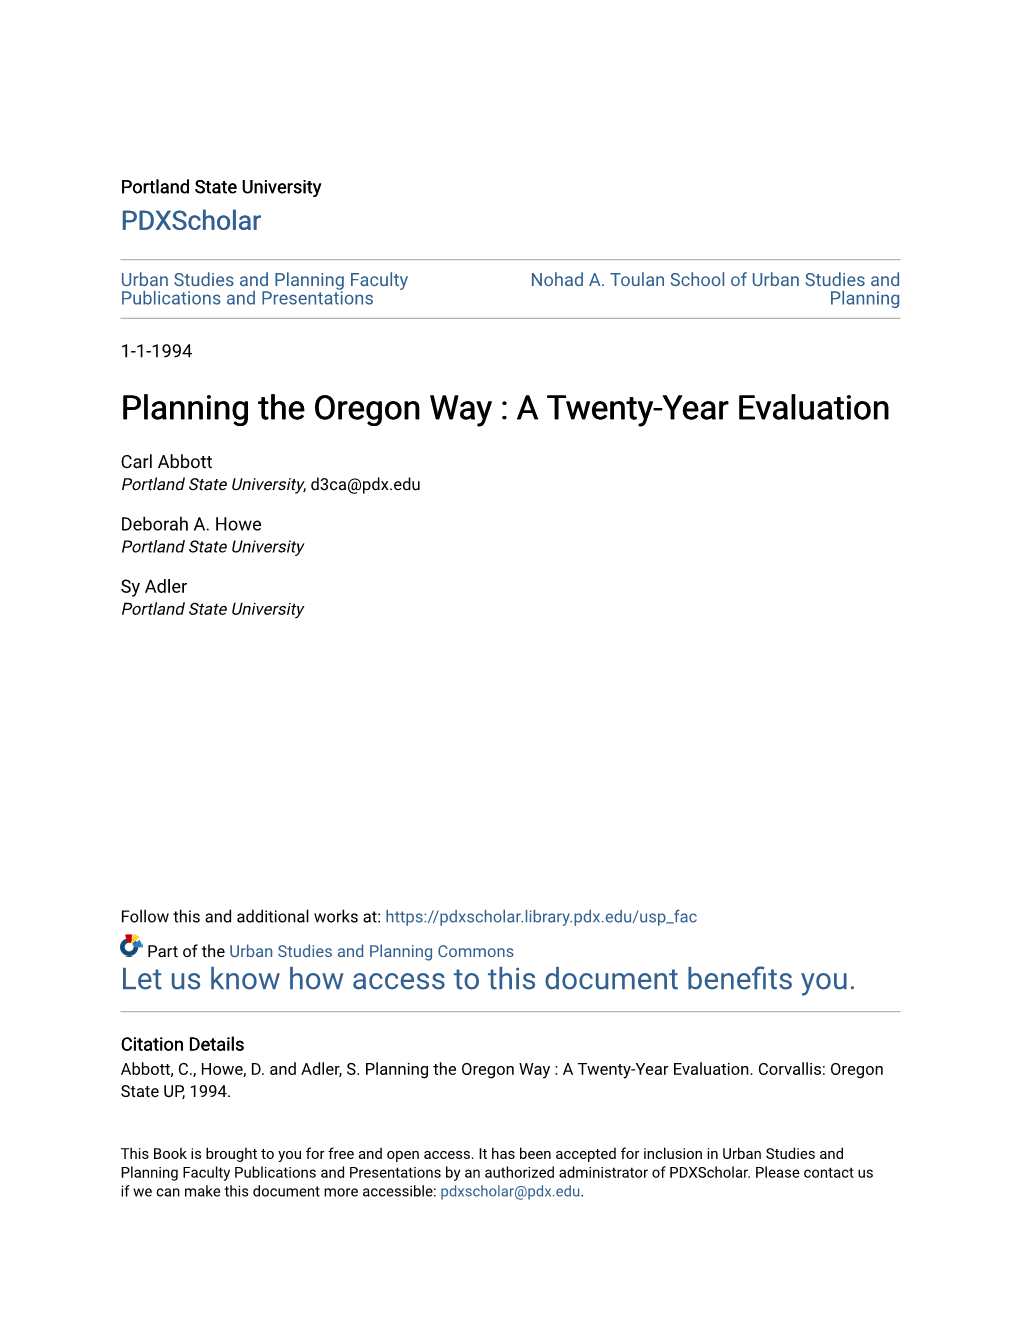 Planning the Oregon Way : a Twenty-Year Evaluation